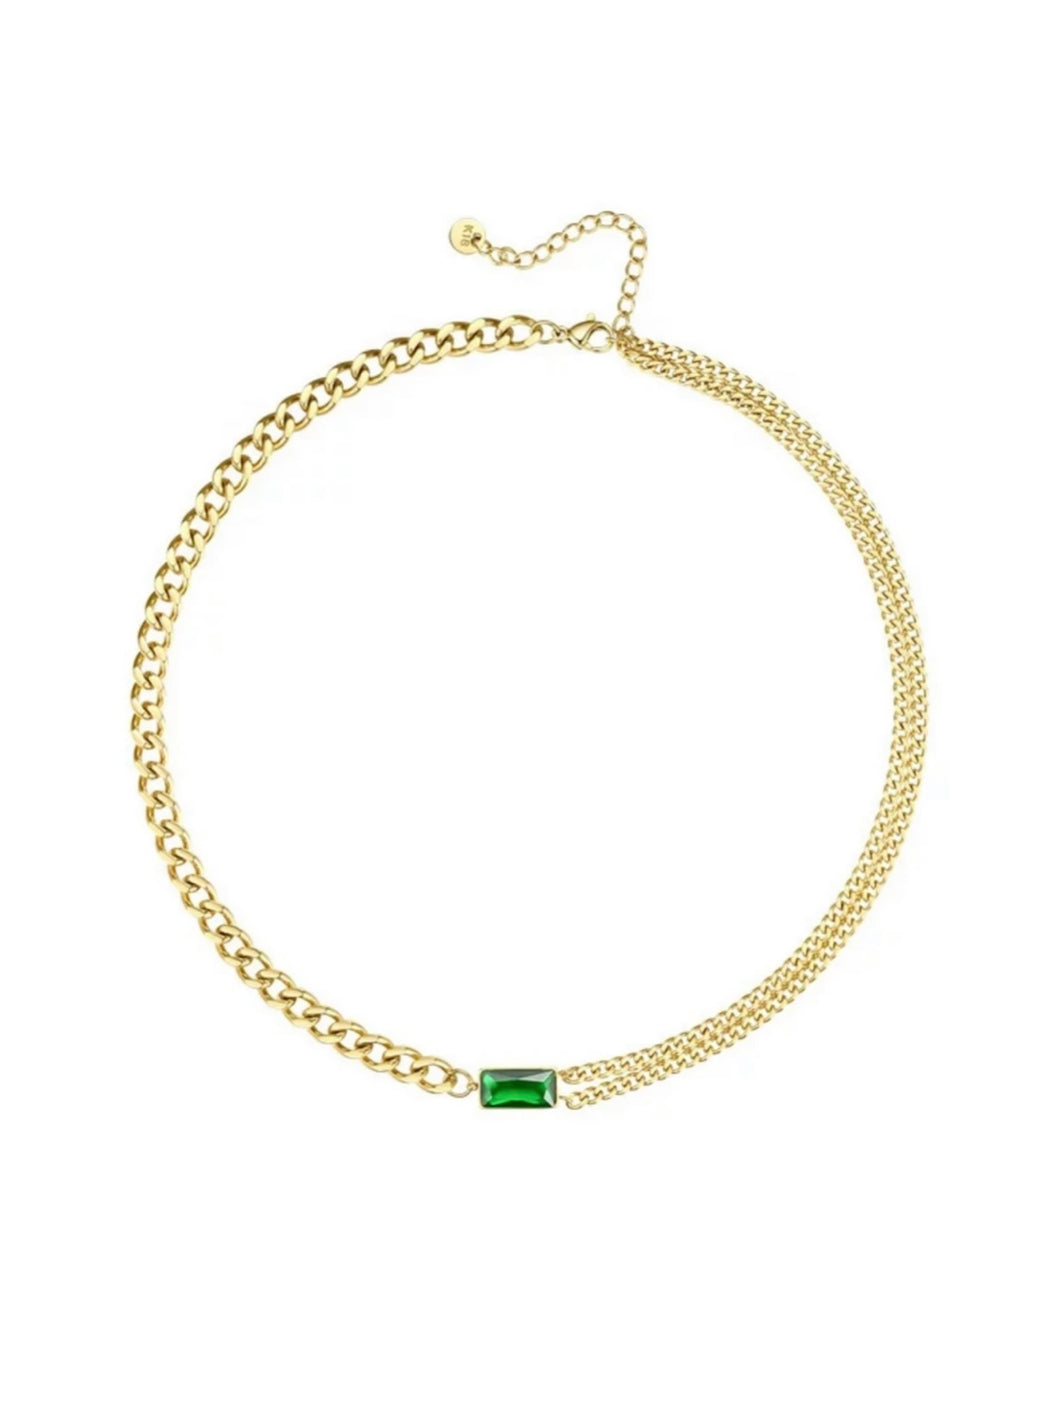 Emerald Chain Necklace